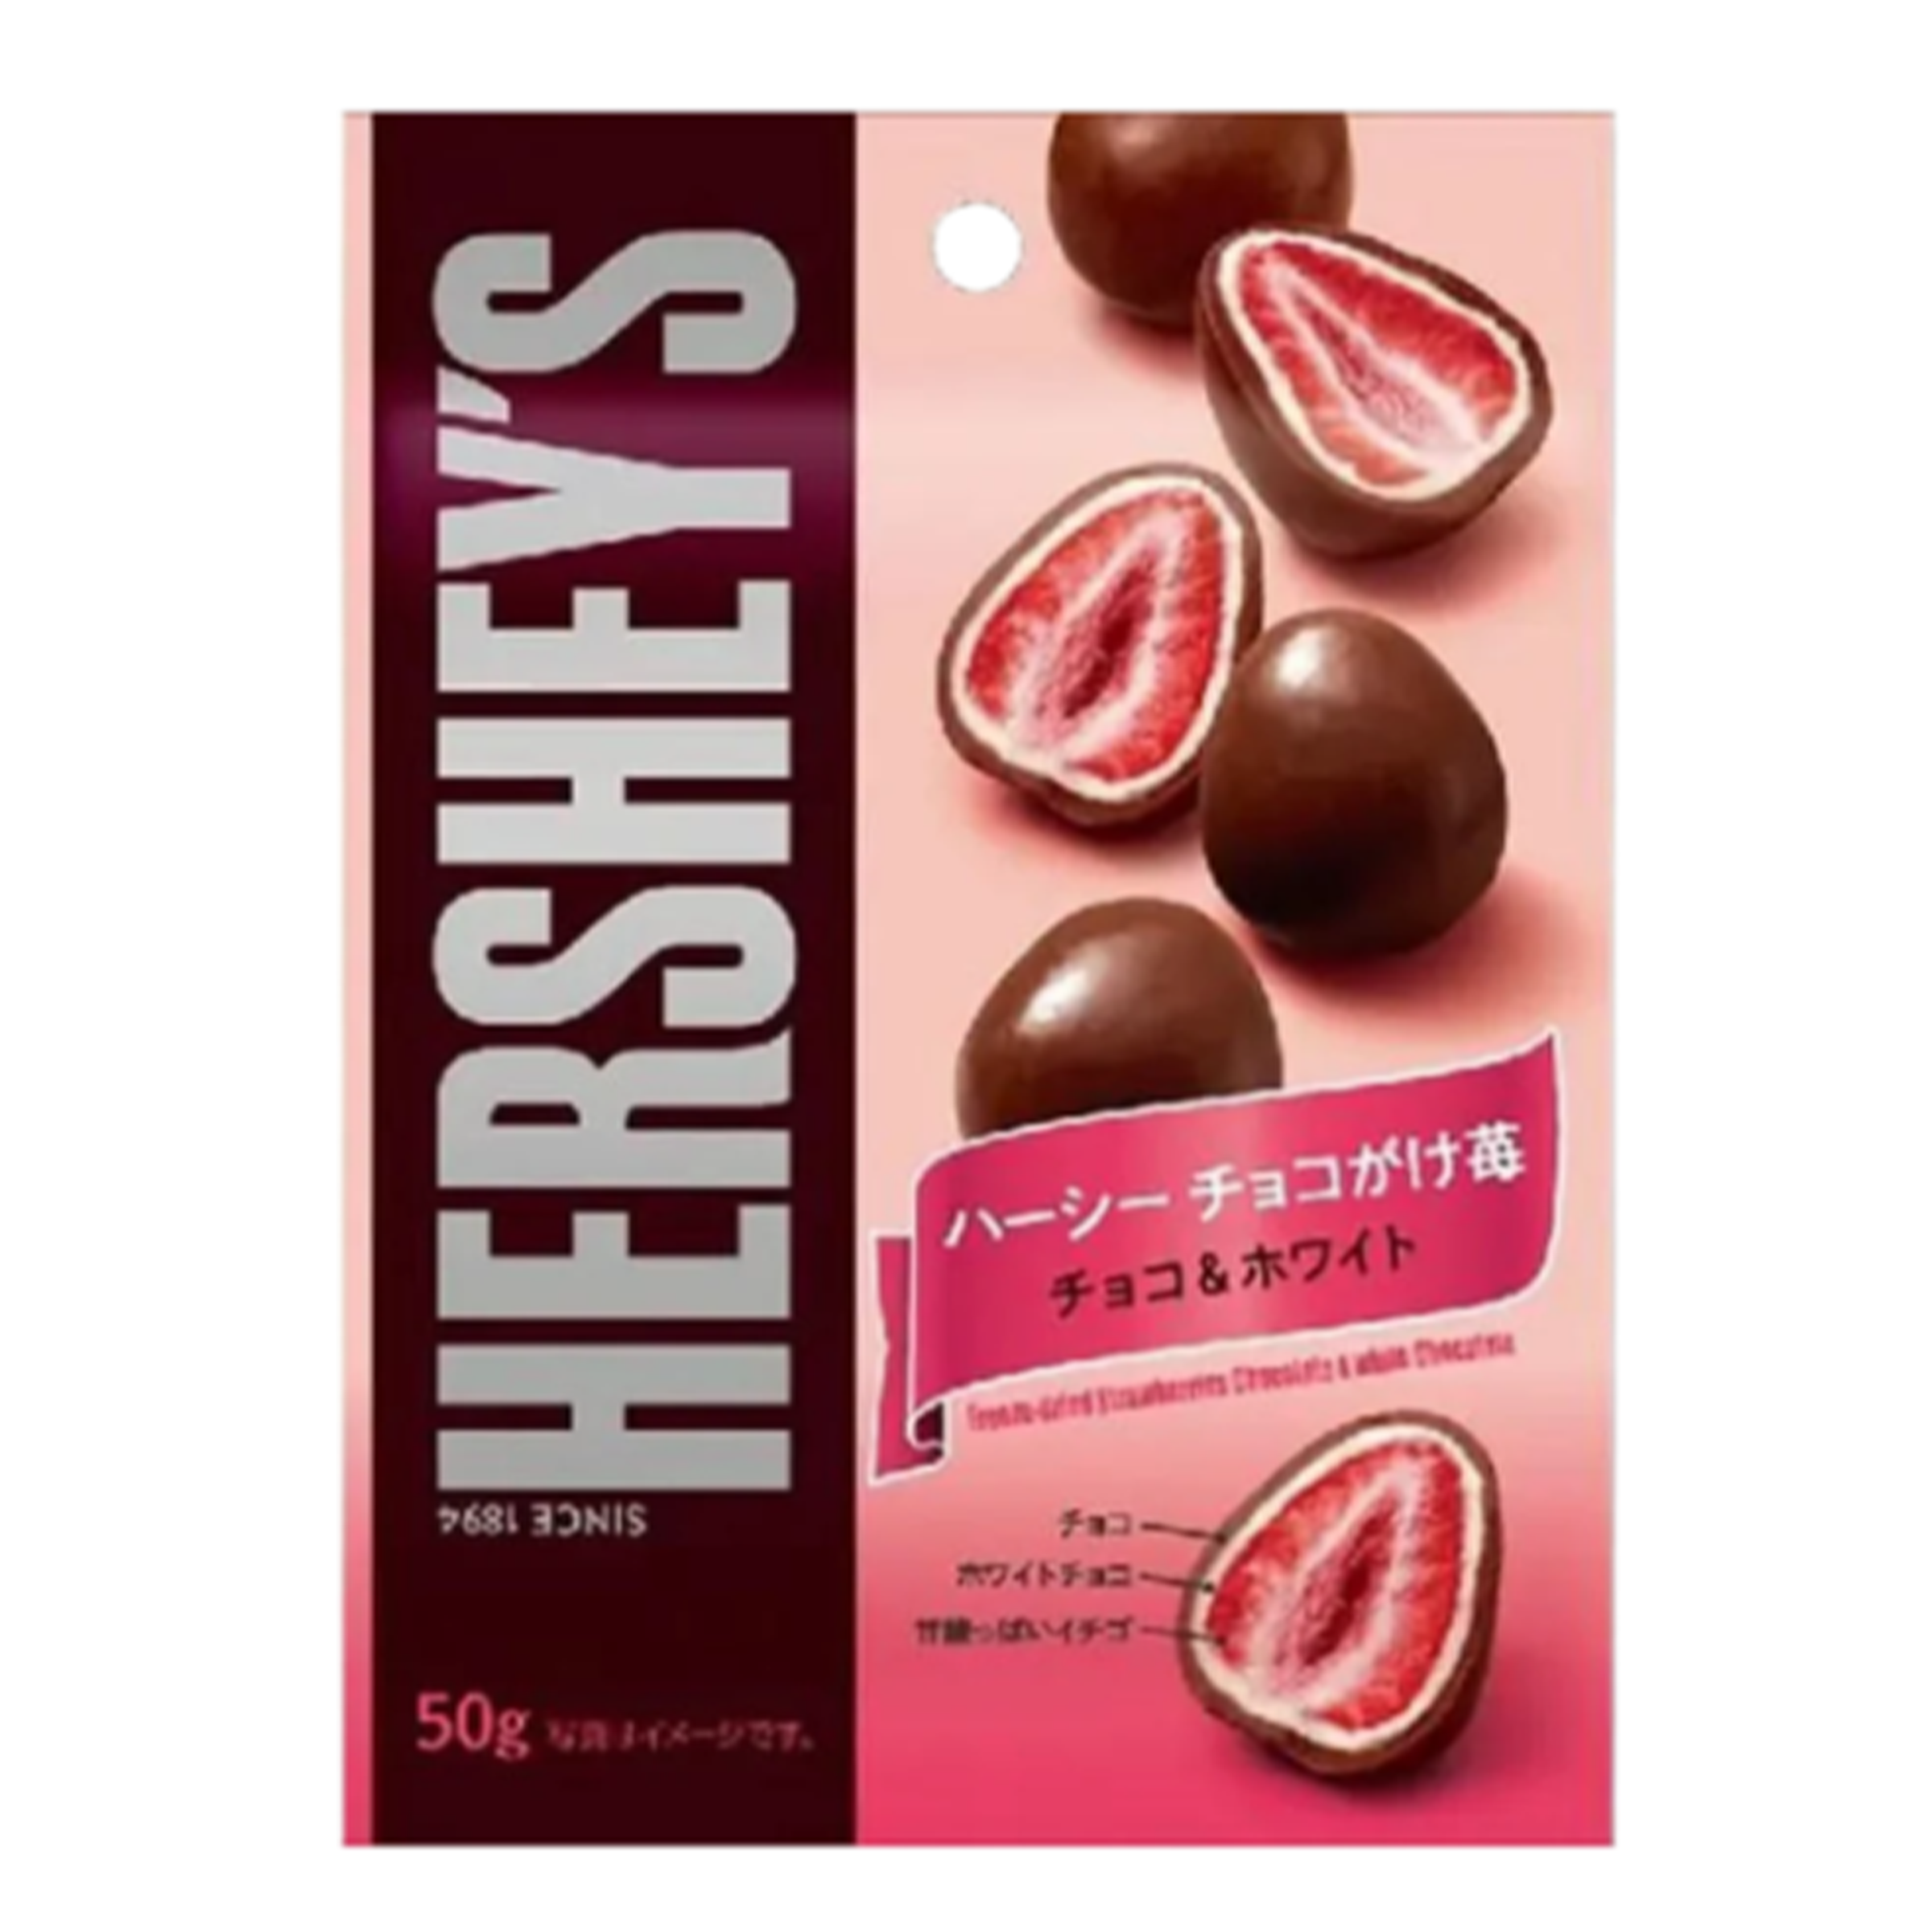 Hershey's Freeze Dried Strawberries - Milk Chocolate (Japan)